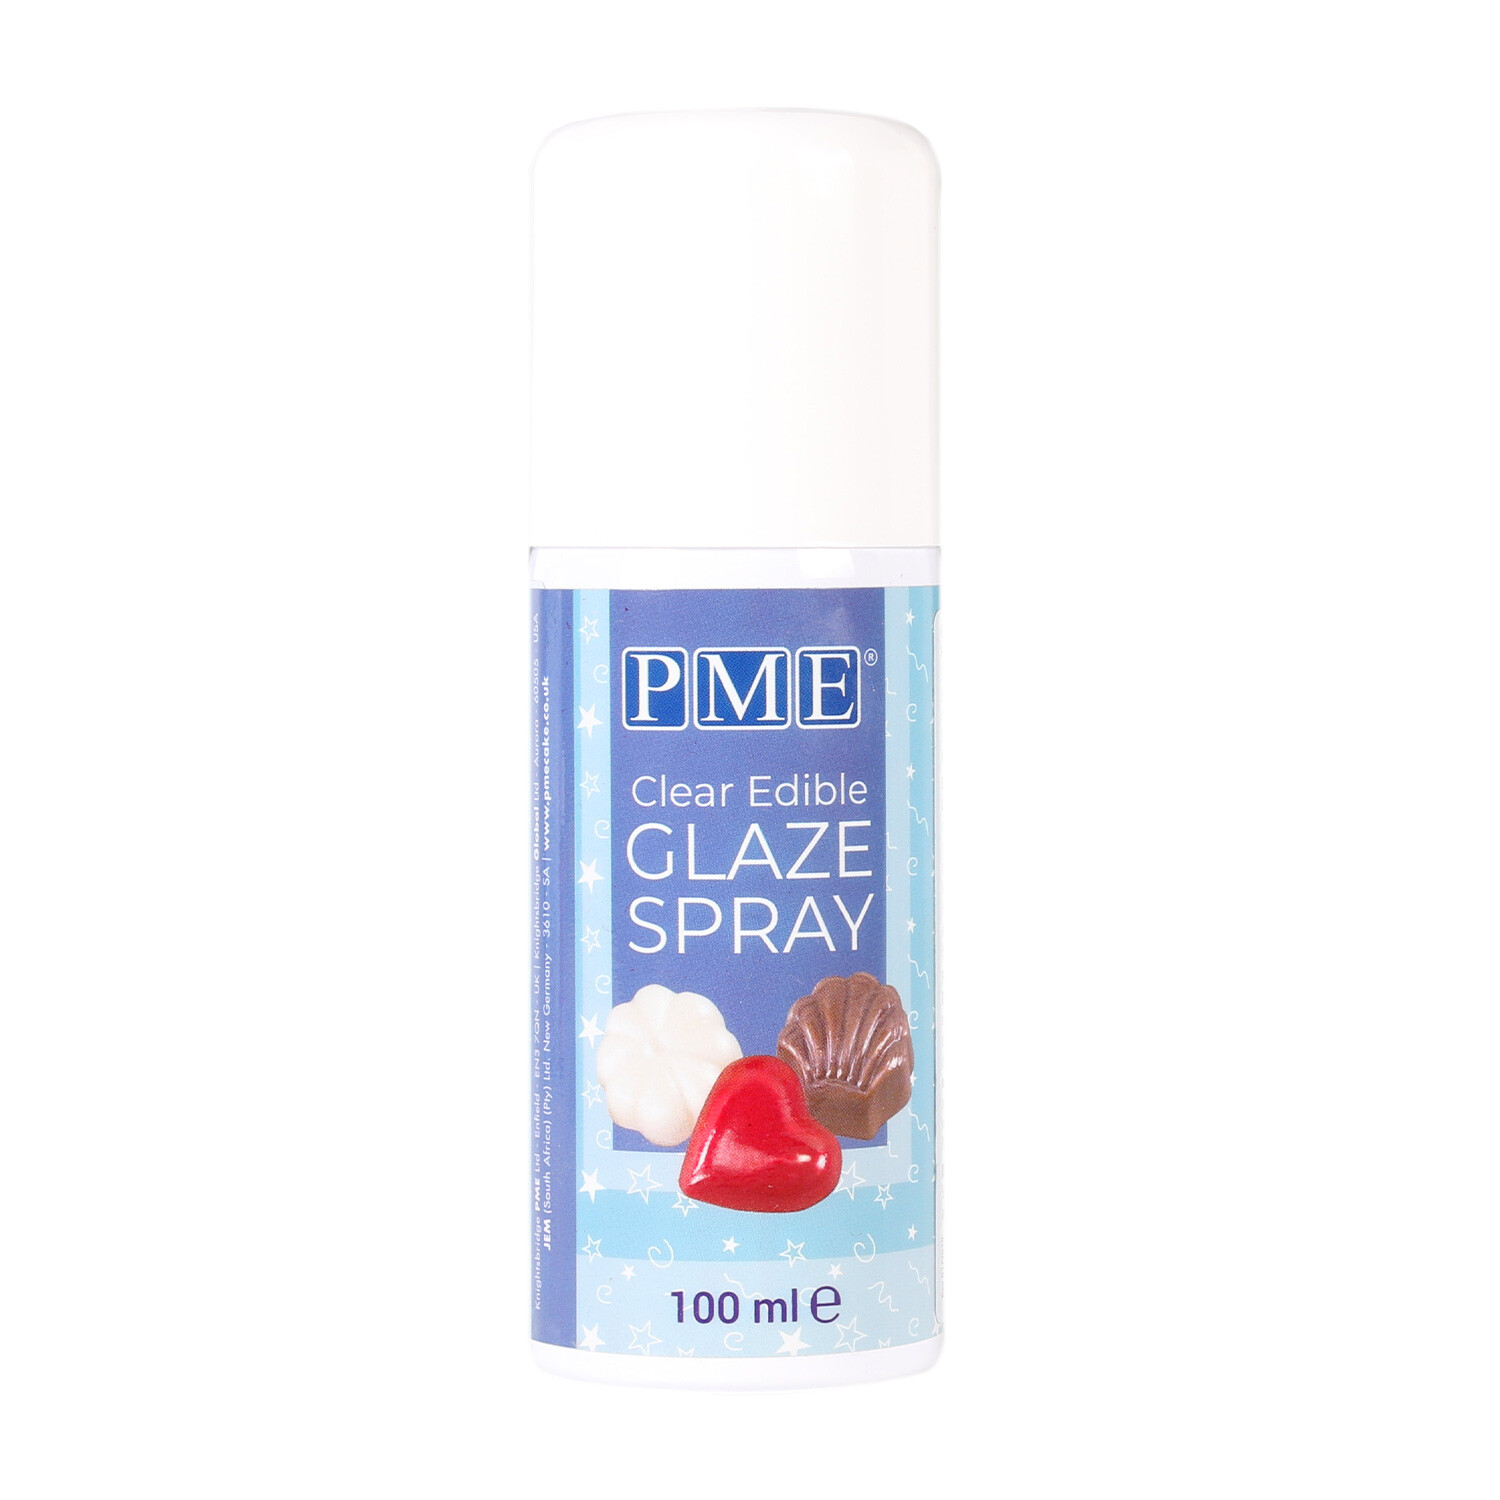 PME Clear Edible Glaze Spray Image